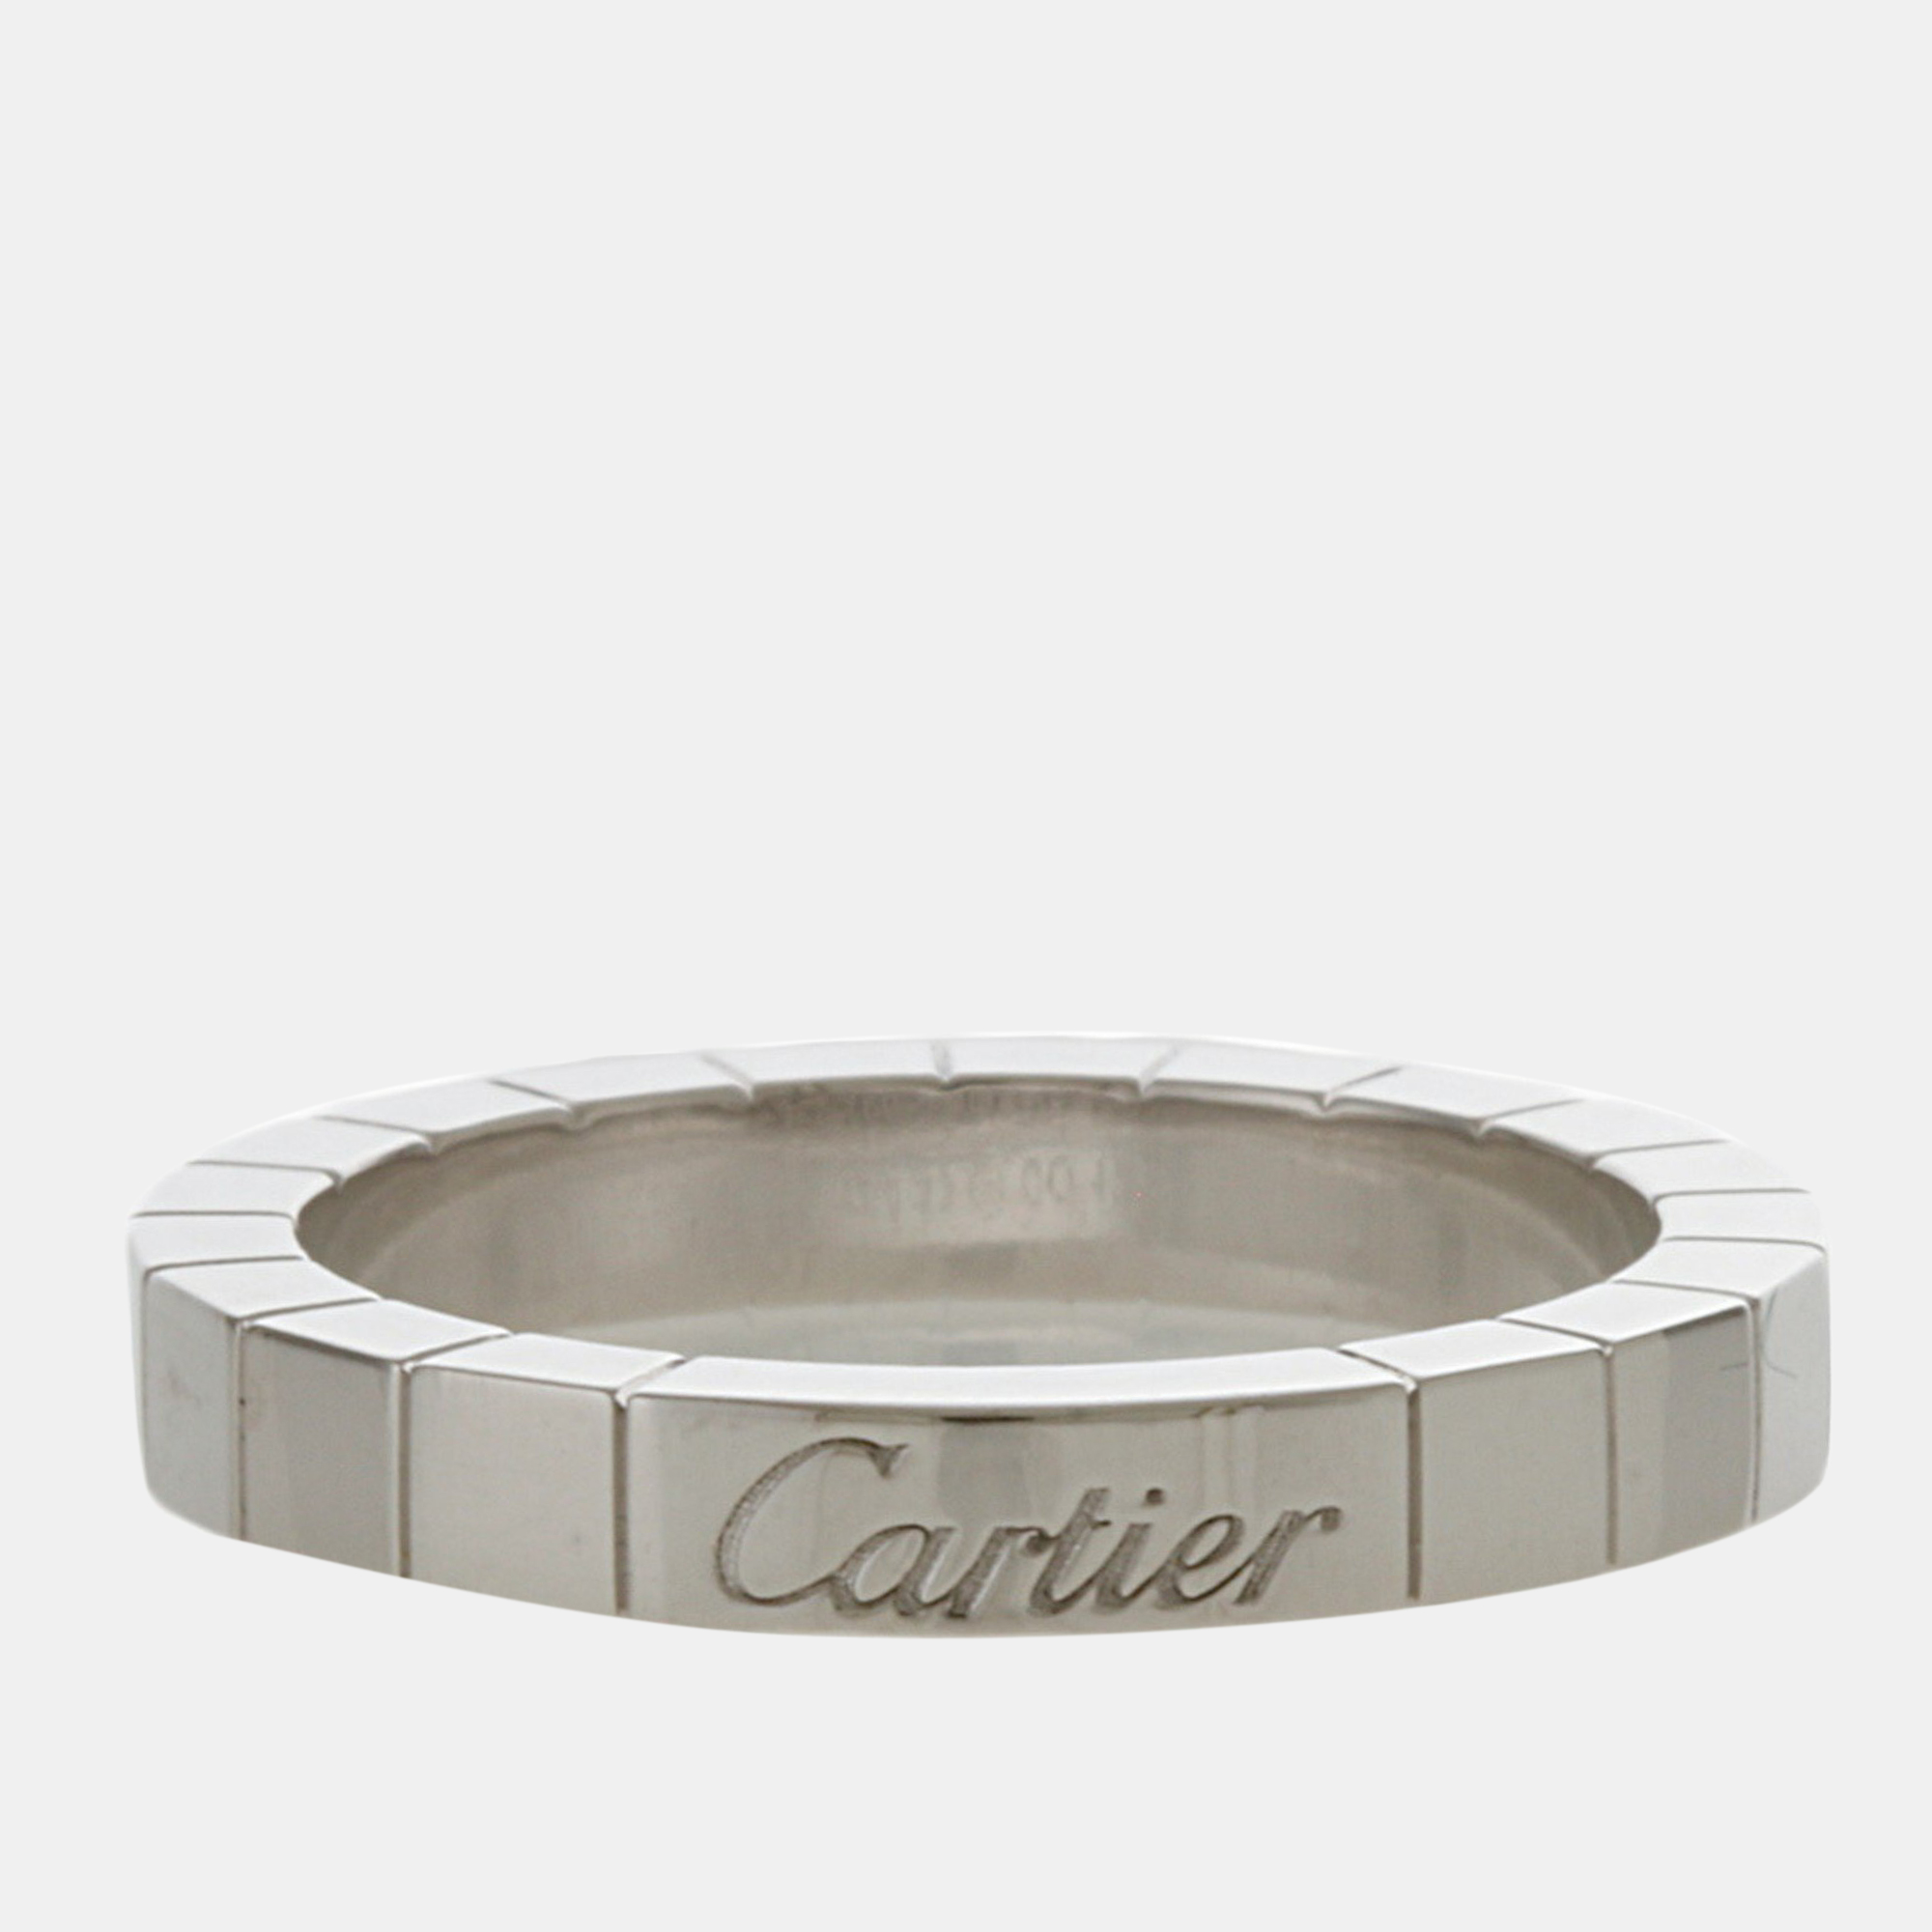 Cartier 18K White Gold Lanieres Wedding Band Ring EU 53